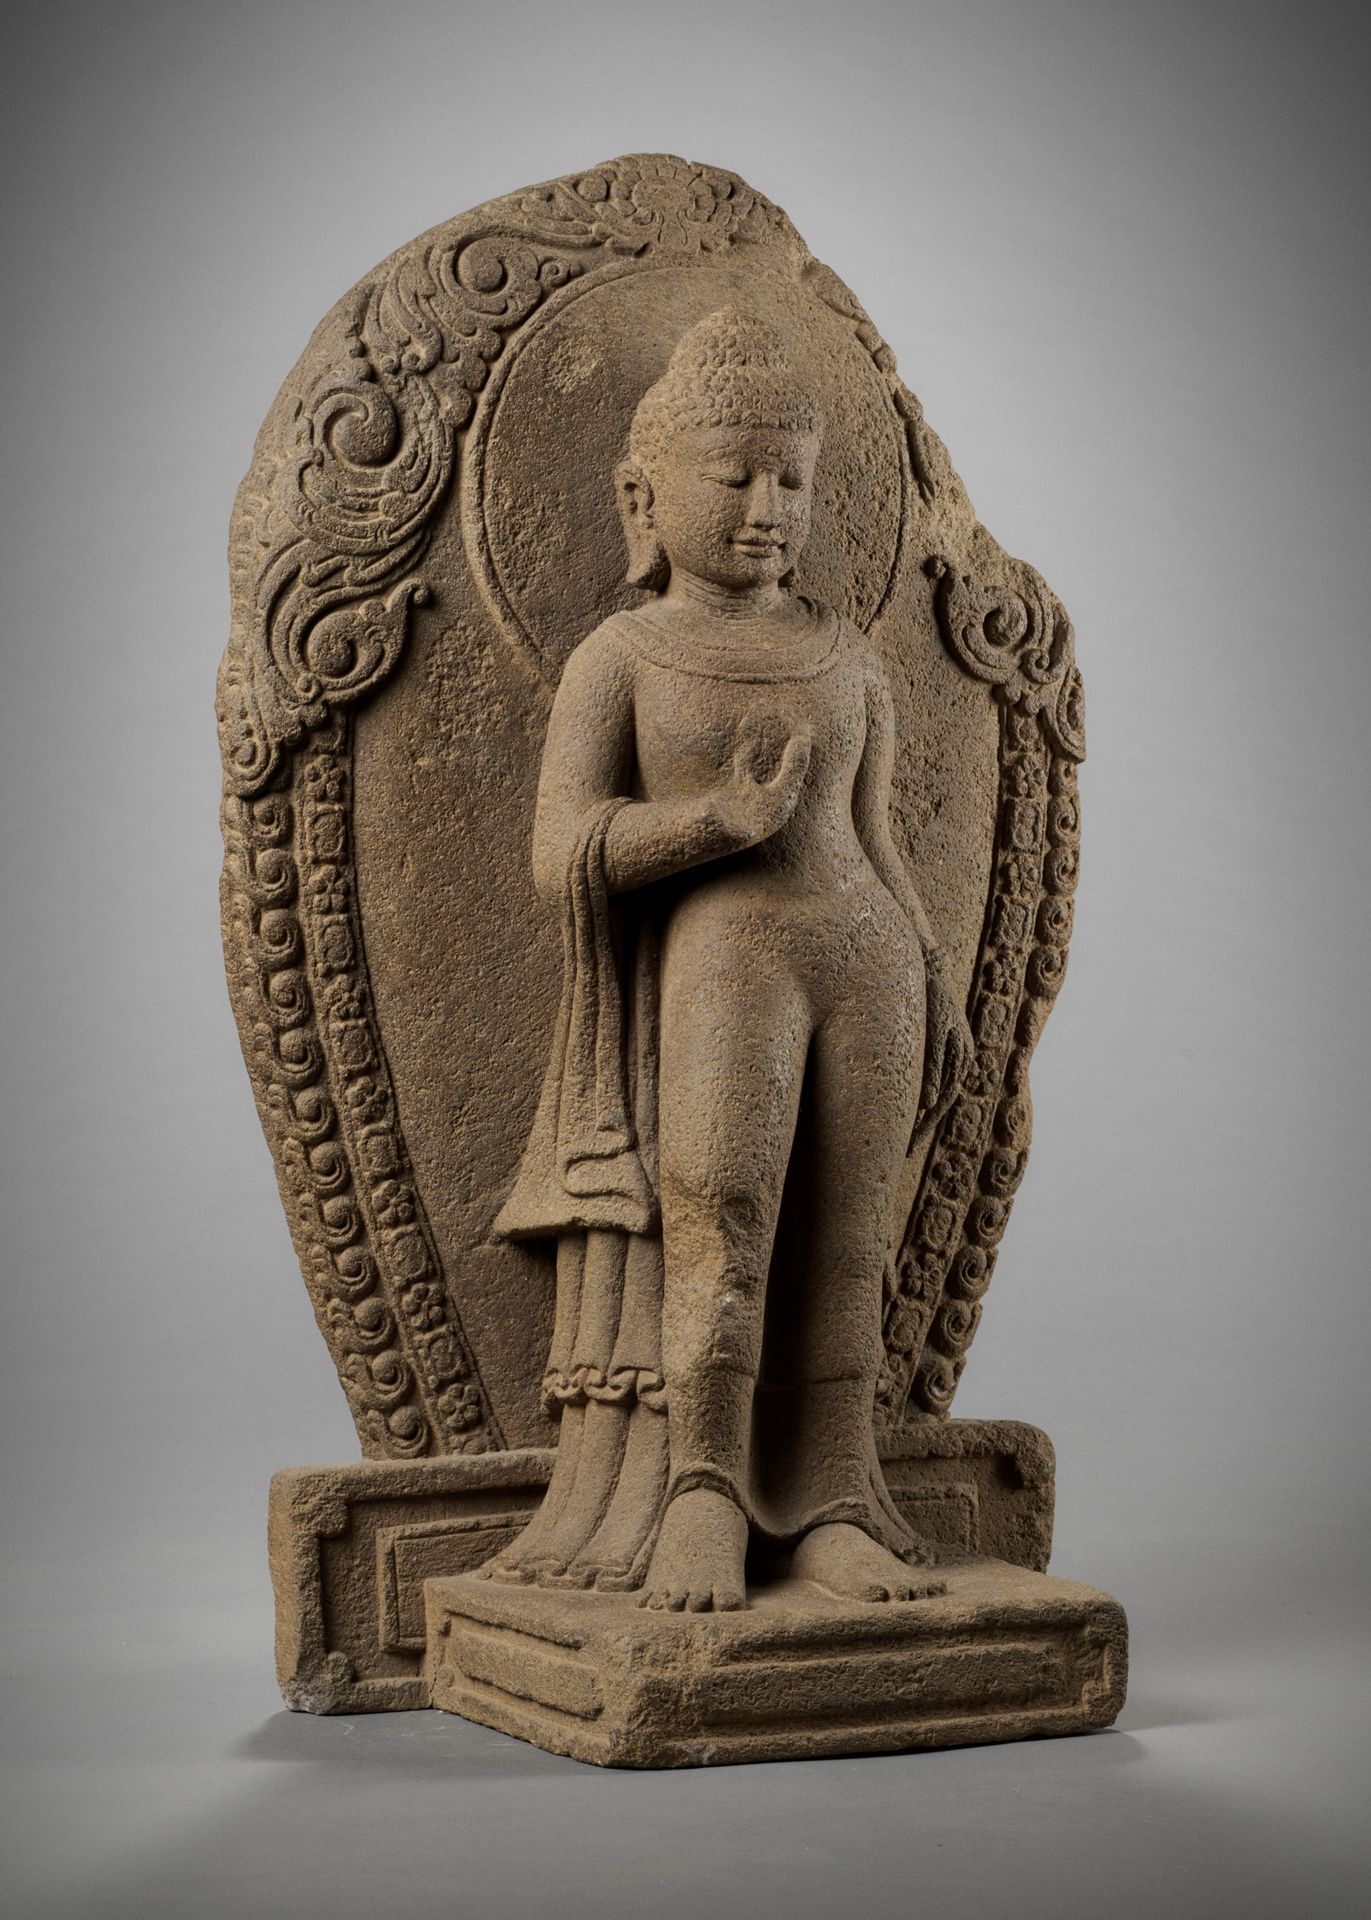 A RARE ANDESITE STATUE OF BUDDHA, CENTRAL JAVA, 9TH CENTURY 罕见的安第斯菩萨像，中JAVA，9世纪
&hellip;